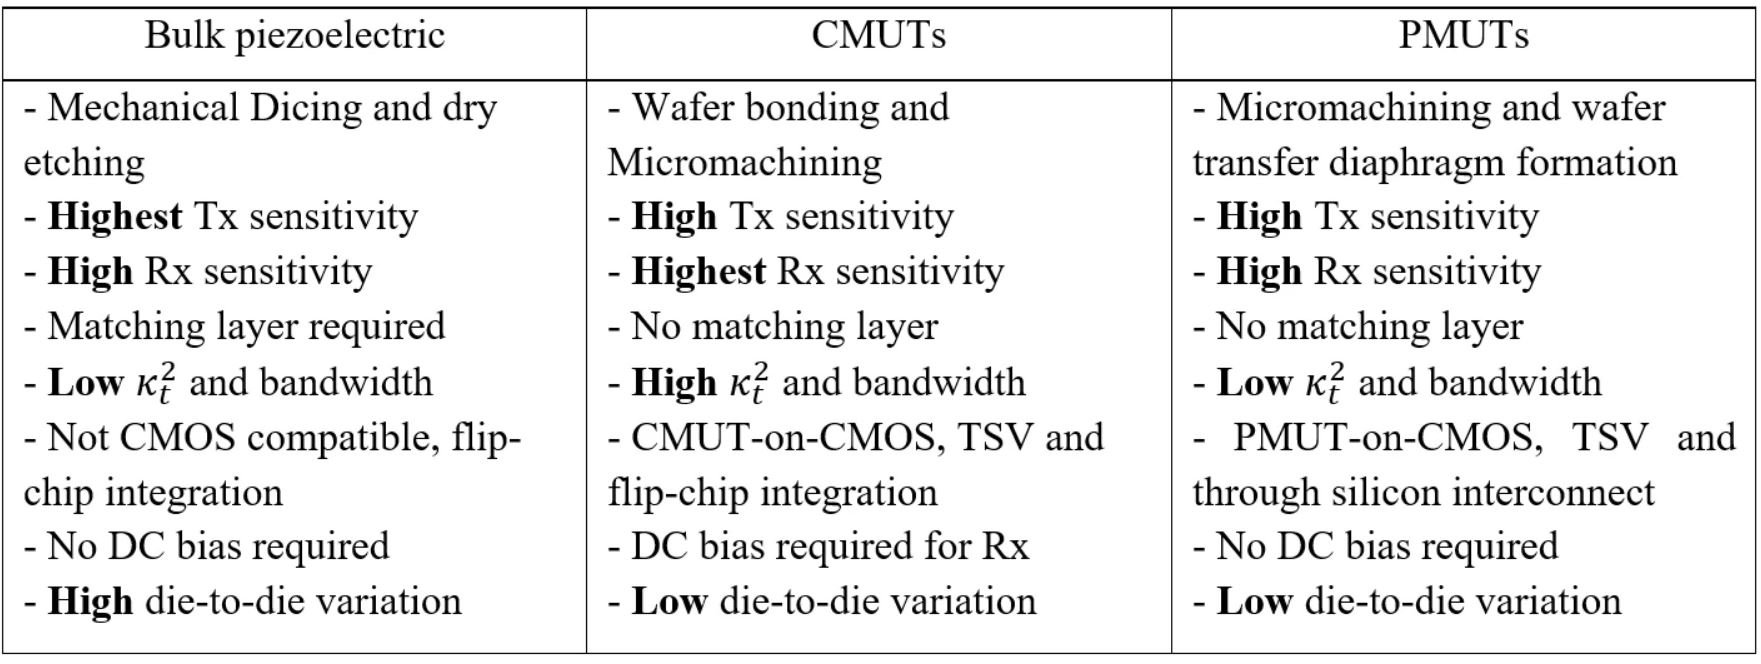 CMUTs, PMUTS and bulk piezoelectric transducers